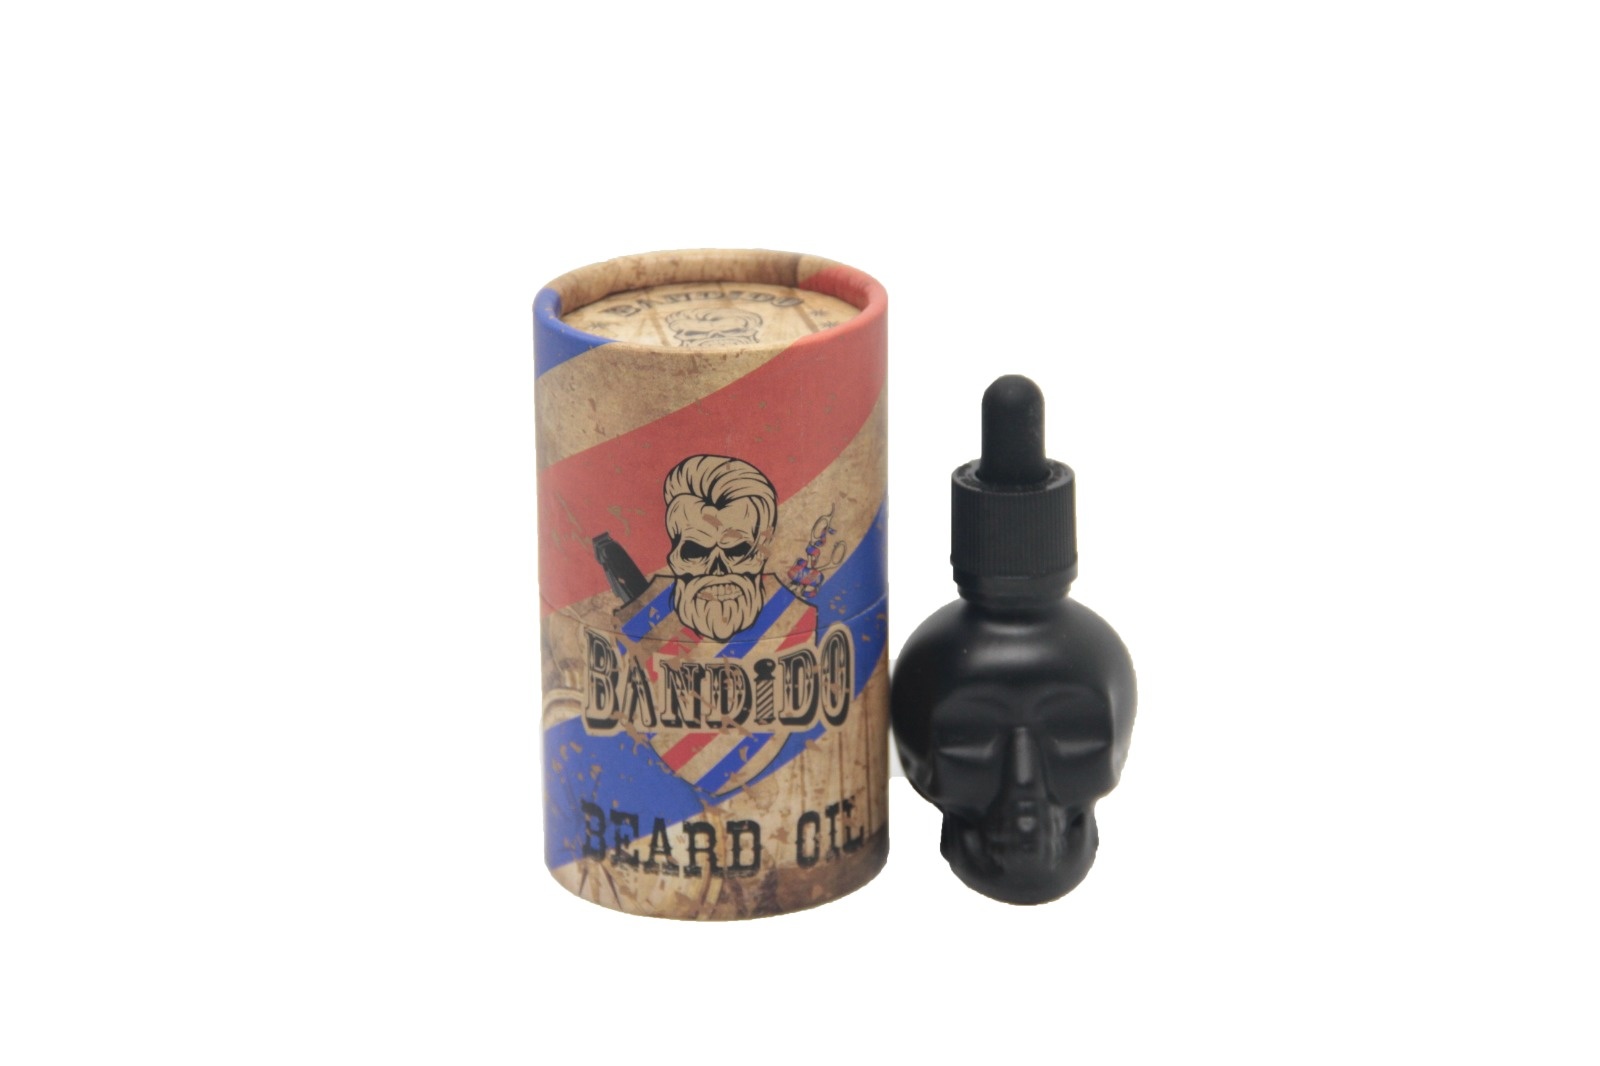 Bandidos Bandido beard oil